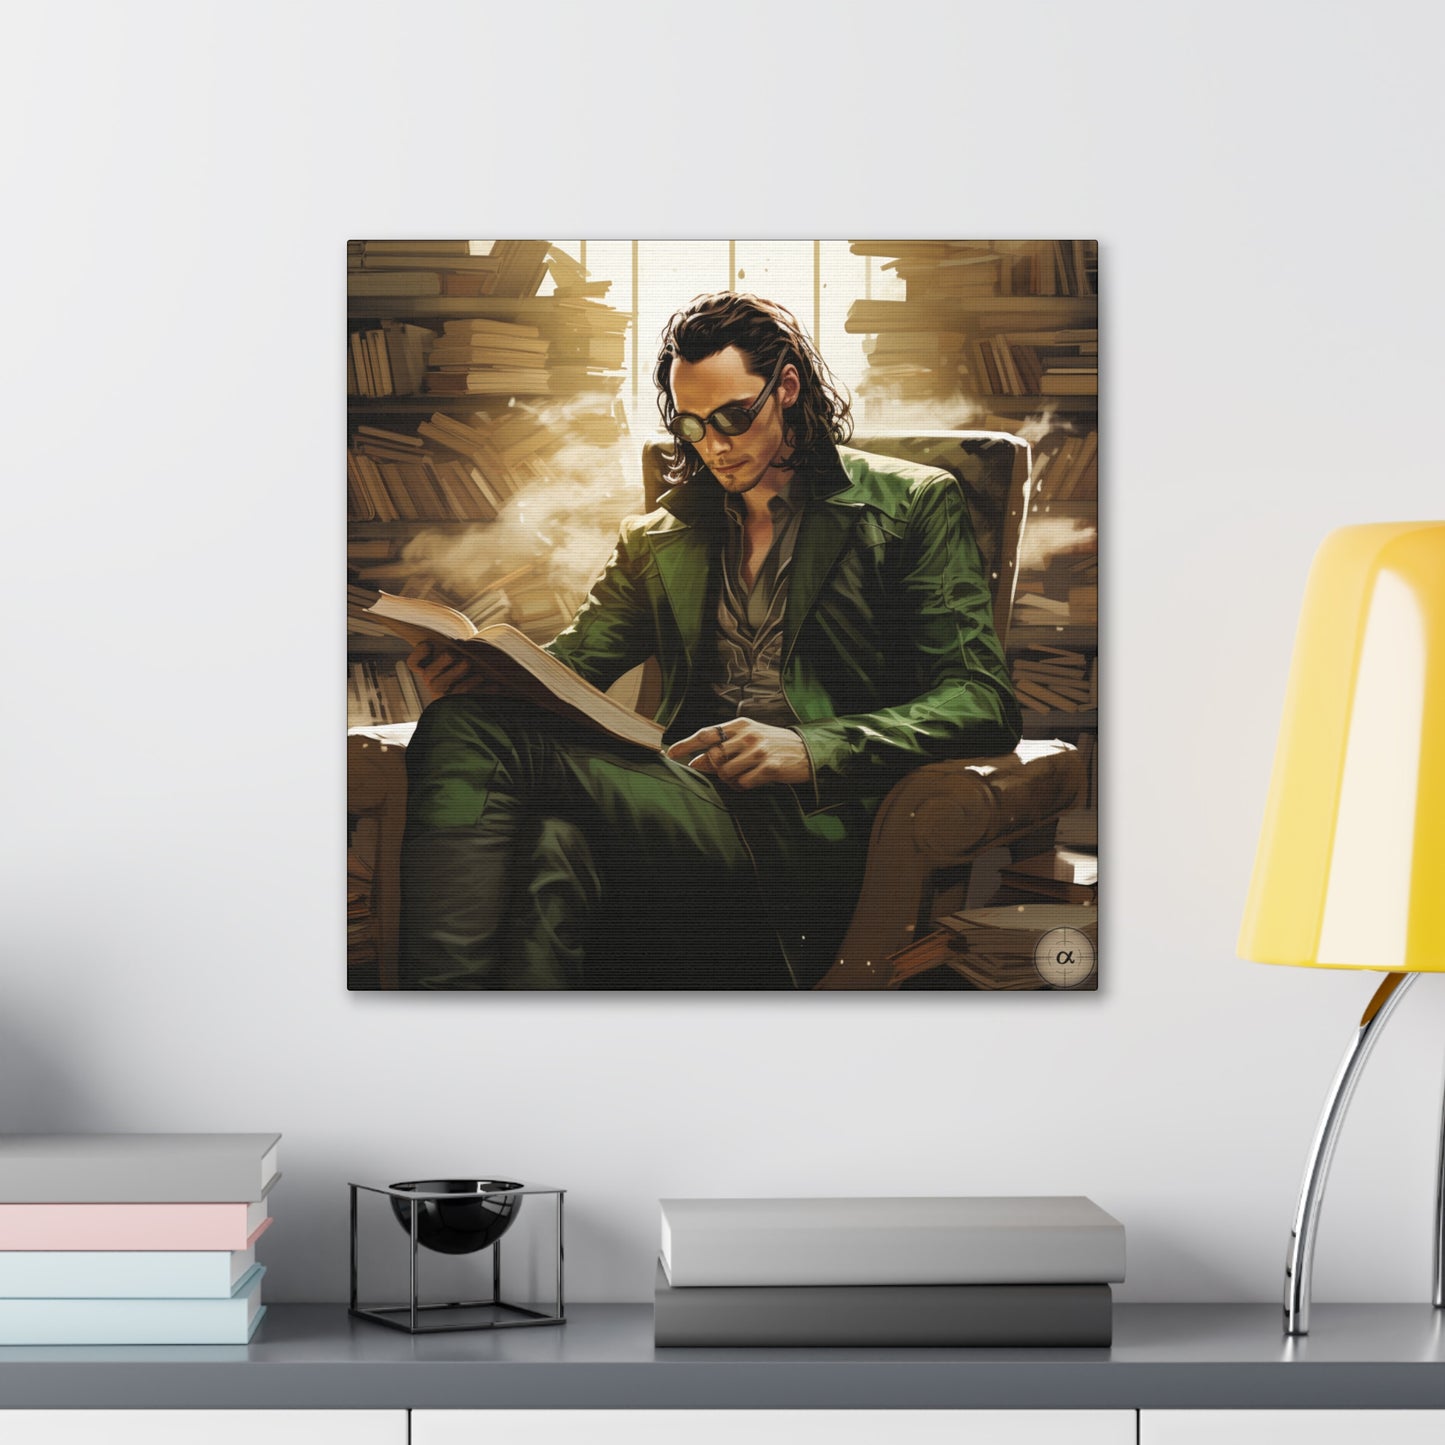 Art by Kendyll: "Loki, The Librarian" on Canvas